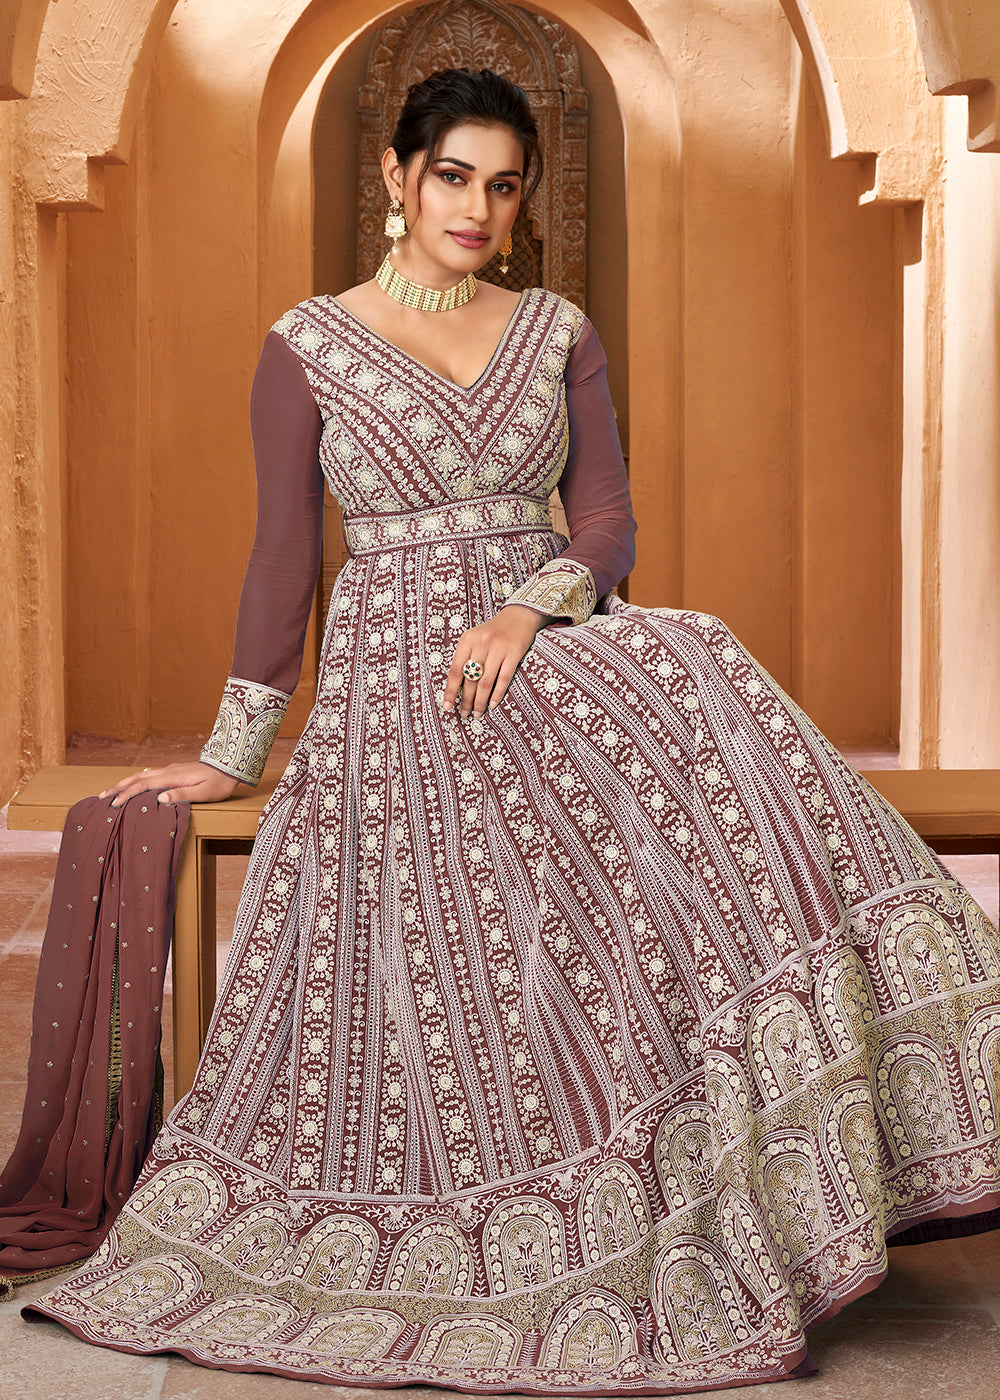 Buy Now Lucknowi Floor Length Walnut Brown Ethnic Anarkali Suit Online in USA, UK, Australia, New Zealand, Canada, Italy & Worldwide at Empress Clothing.